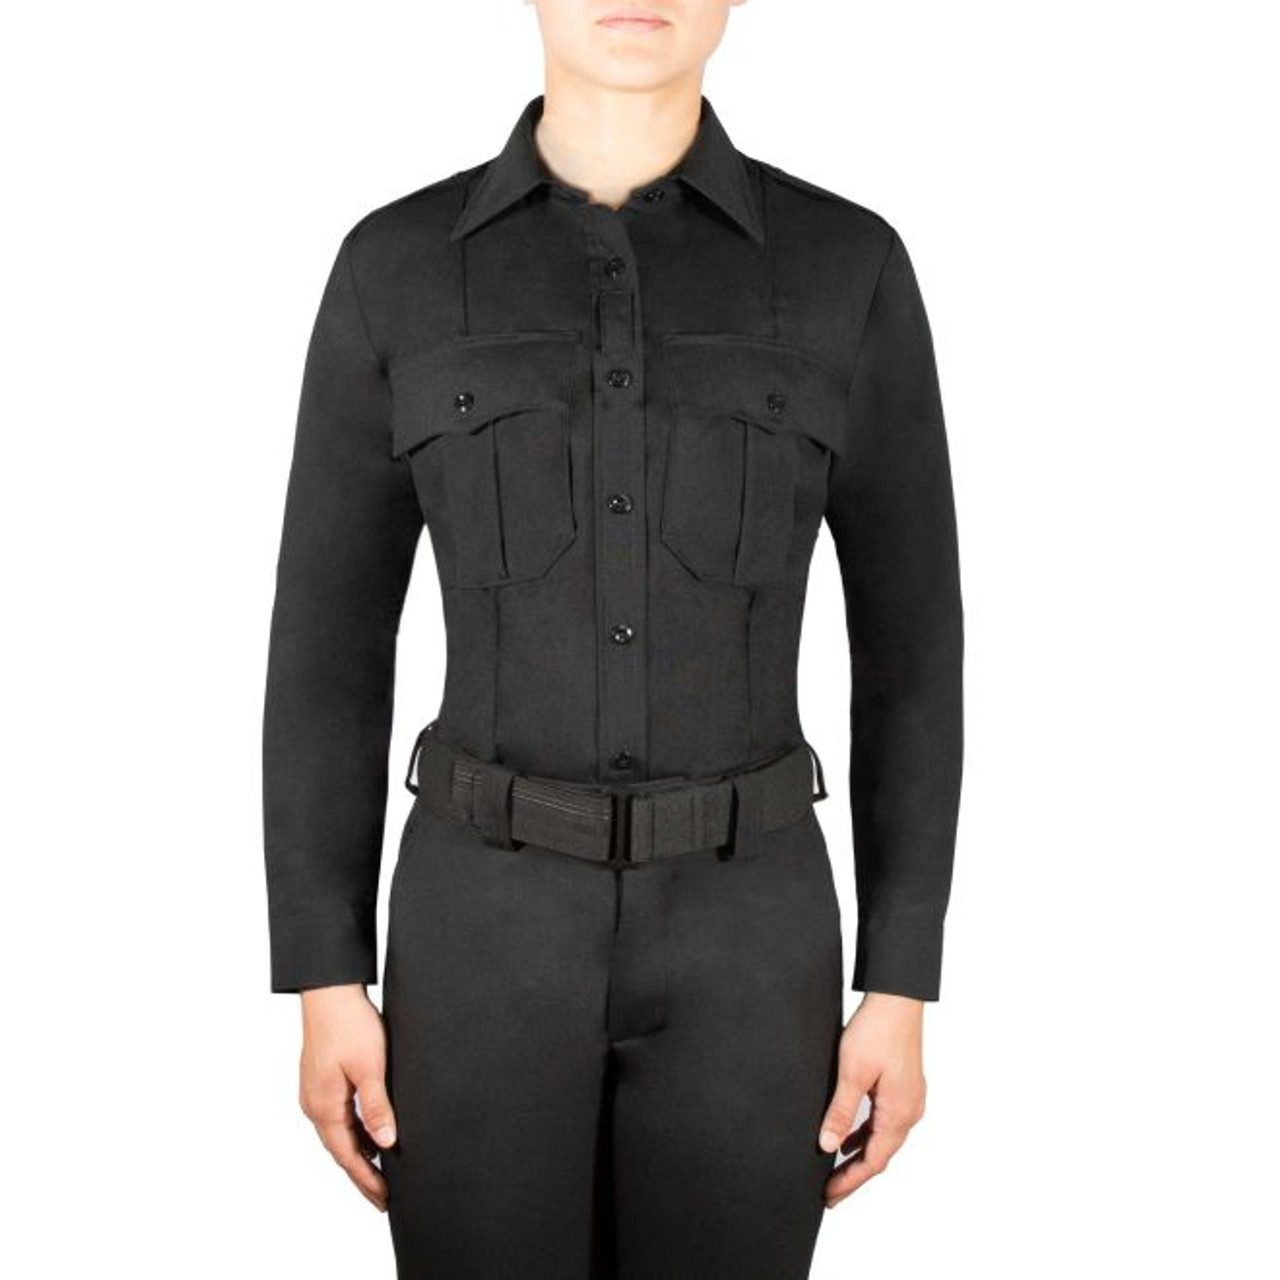 NEW Blauer Dark Navy LS Polyester Supershirt Long Sleeve All Sizes 8670 